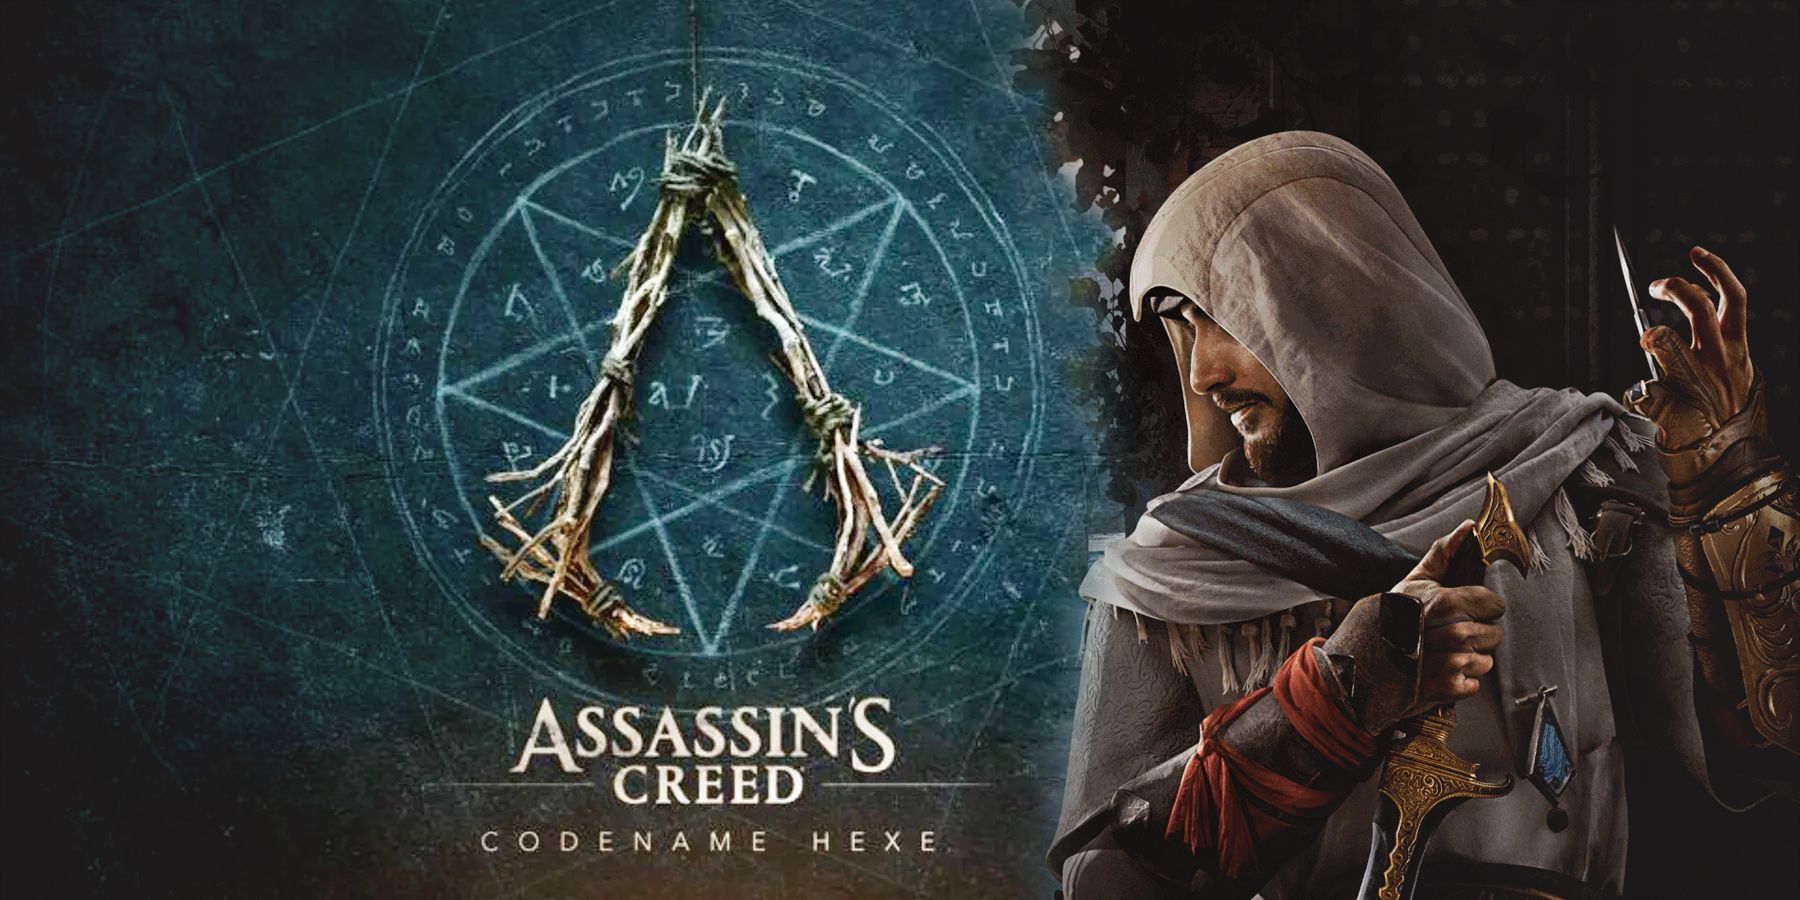 Assassin's Creed Mirage Basim artwork next to Codename Hexe logo